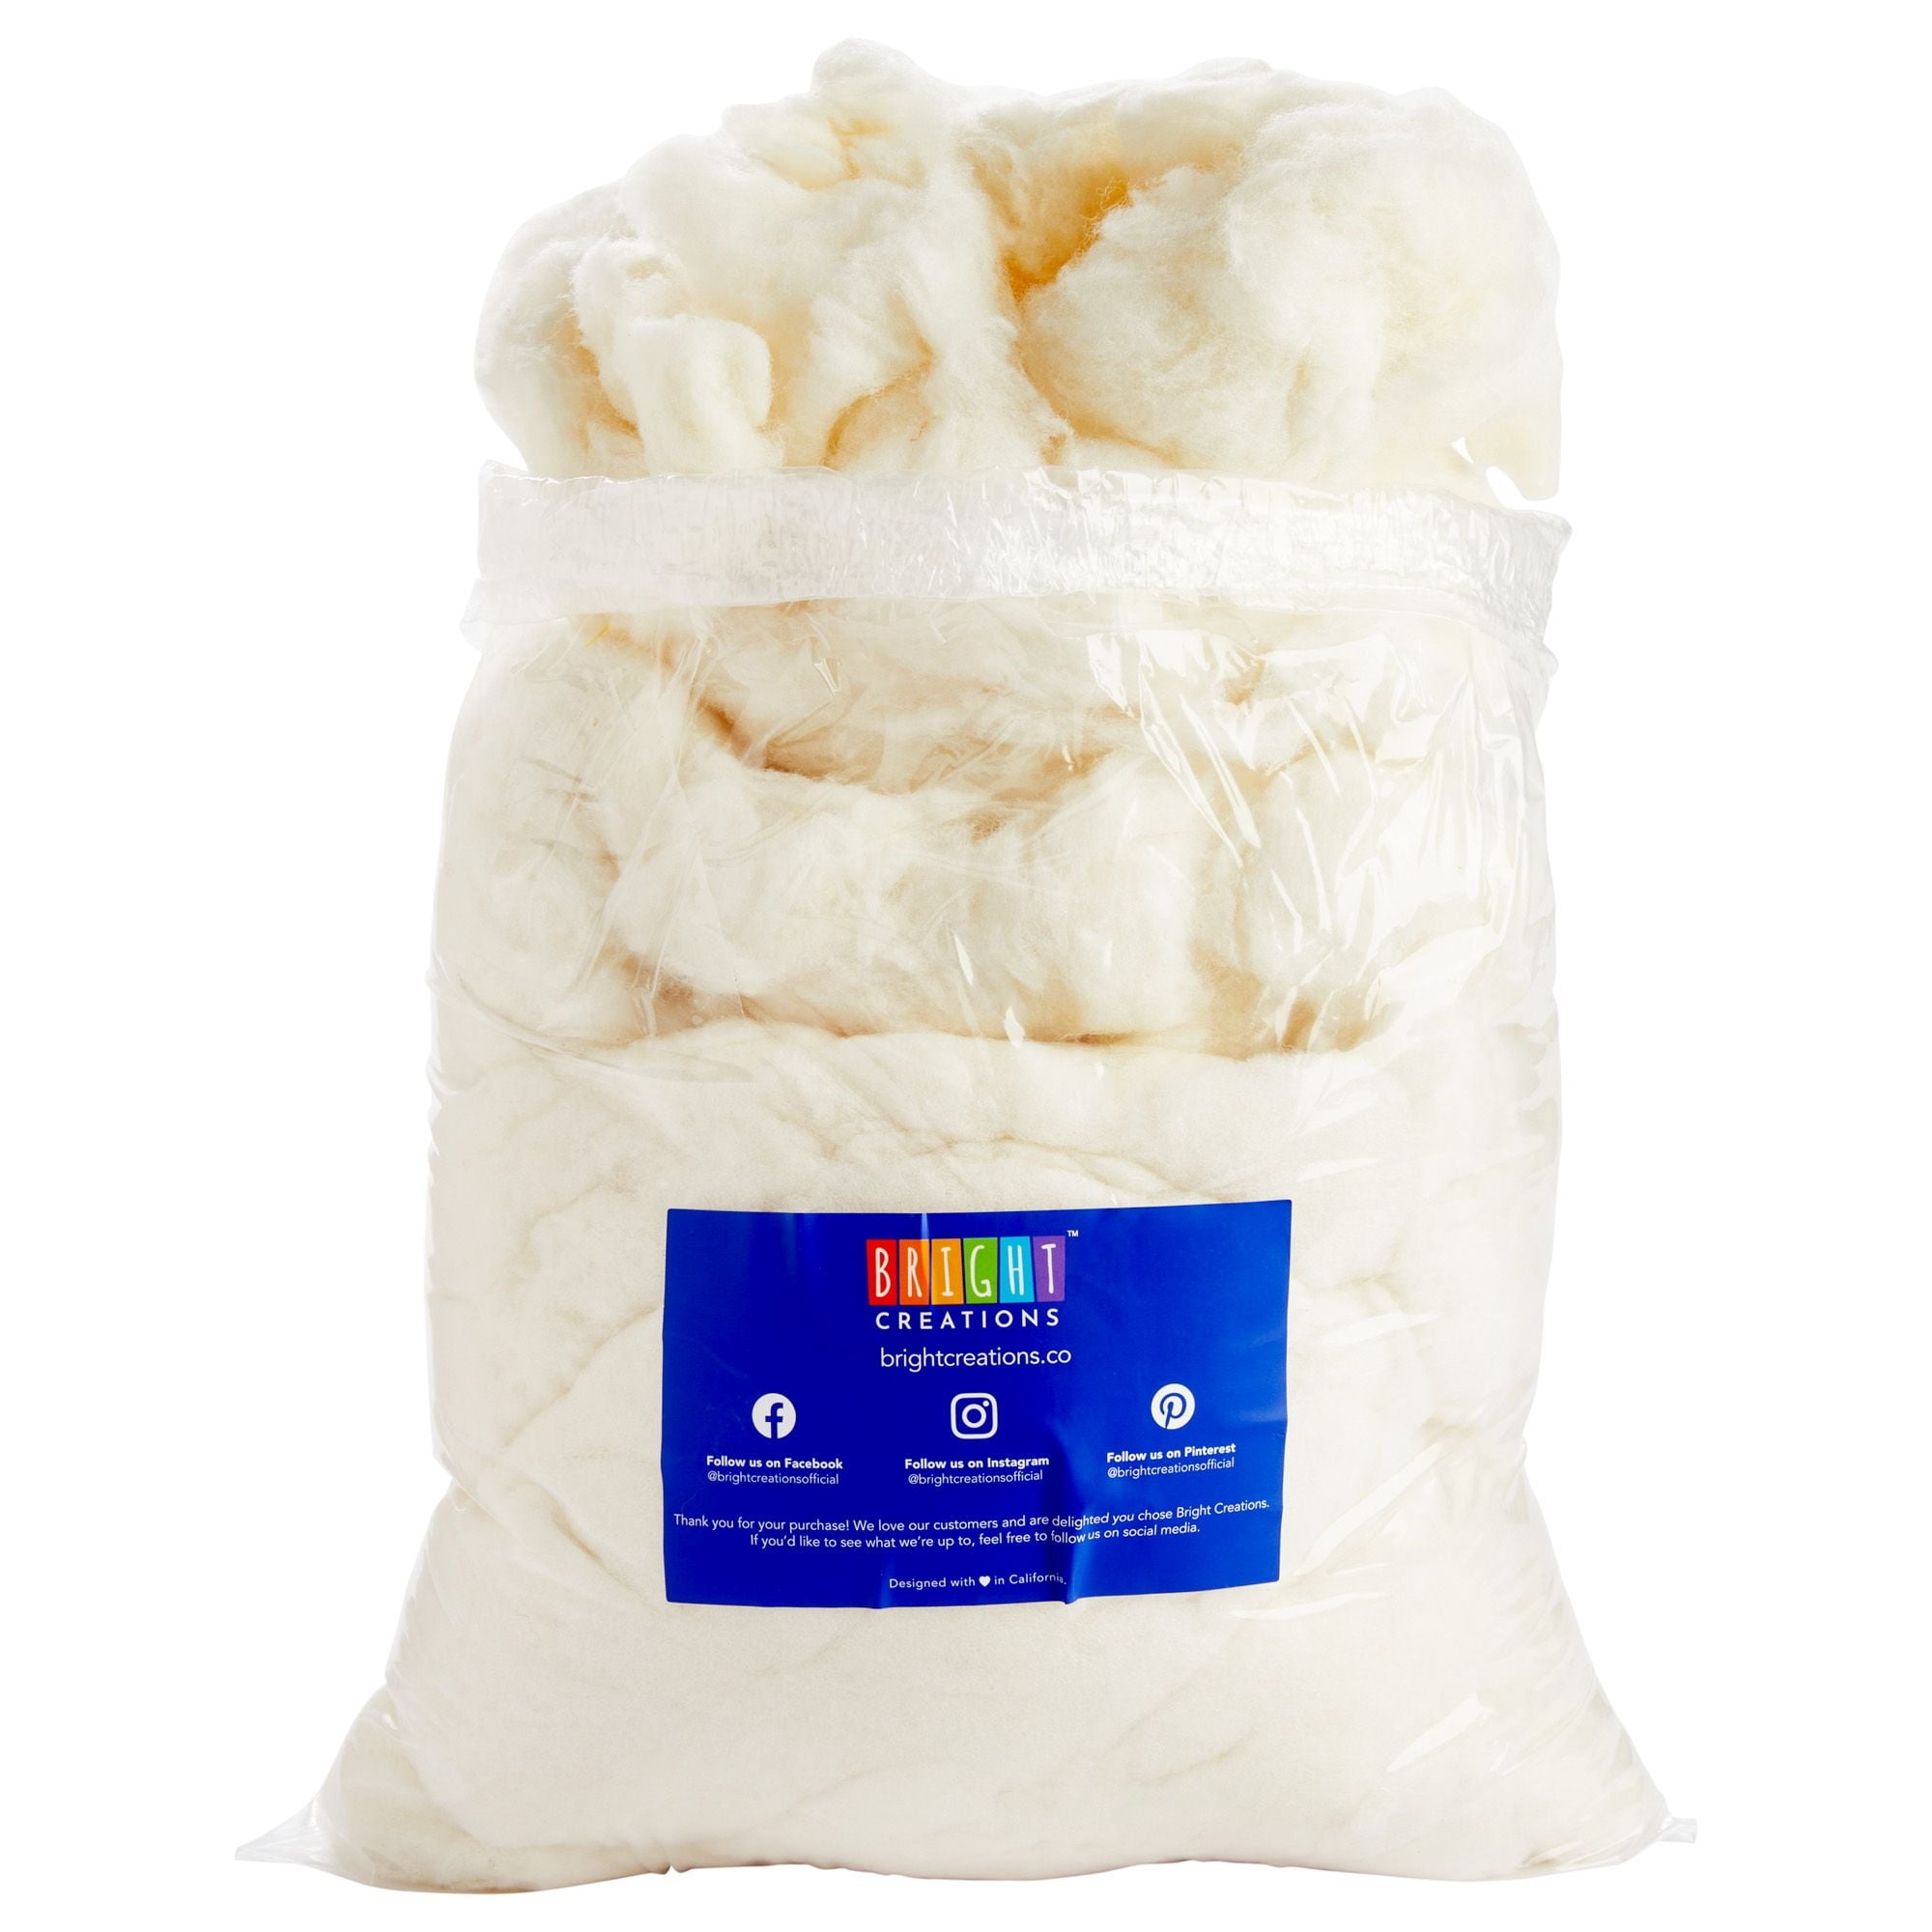 Eurotex Bean Bag Filler Shredded Memory Foam for Pillow Stuffing, Couch  Pillows, Cushions ( lbs 5)